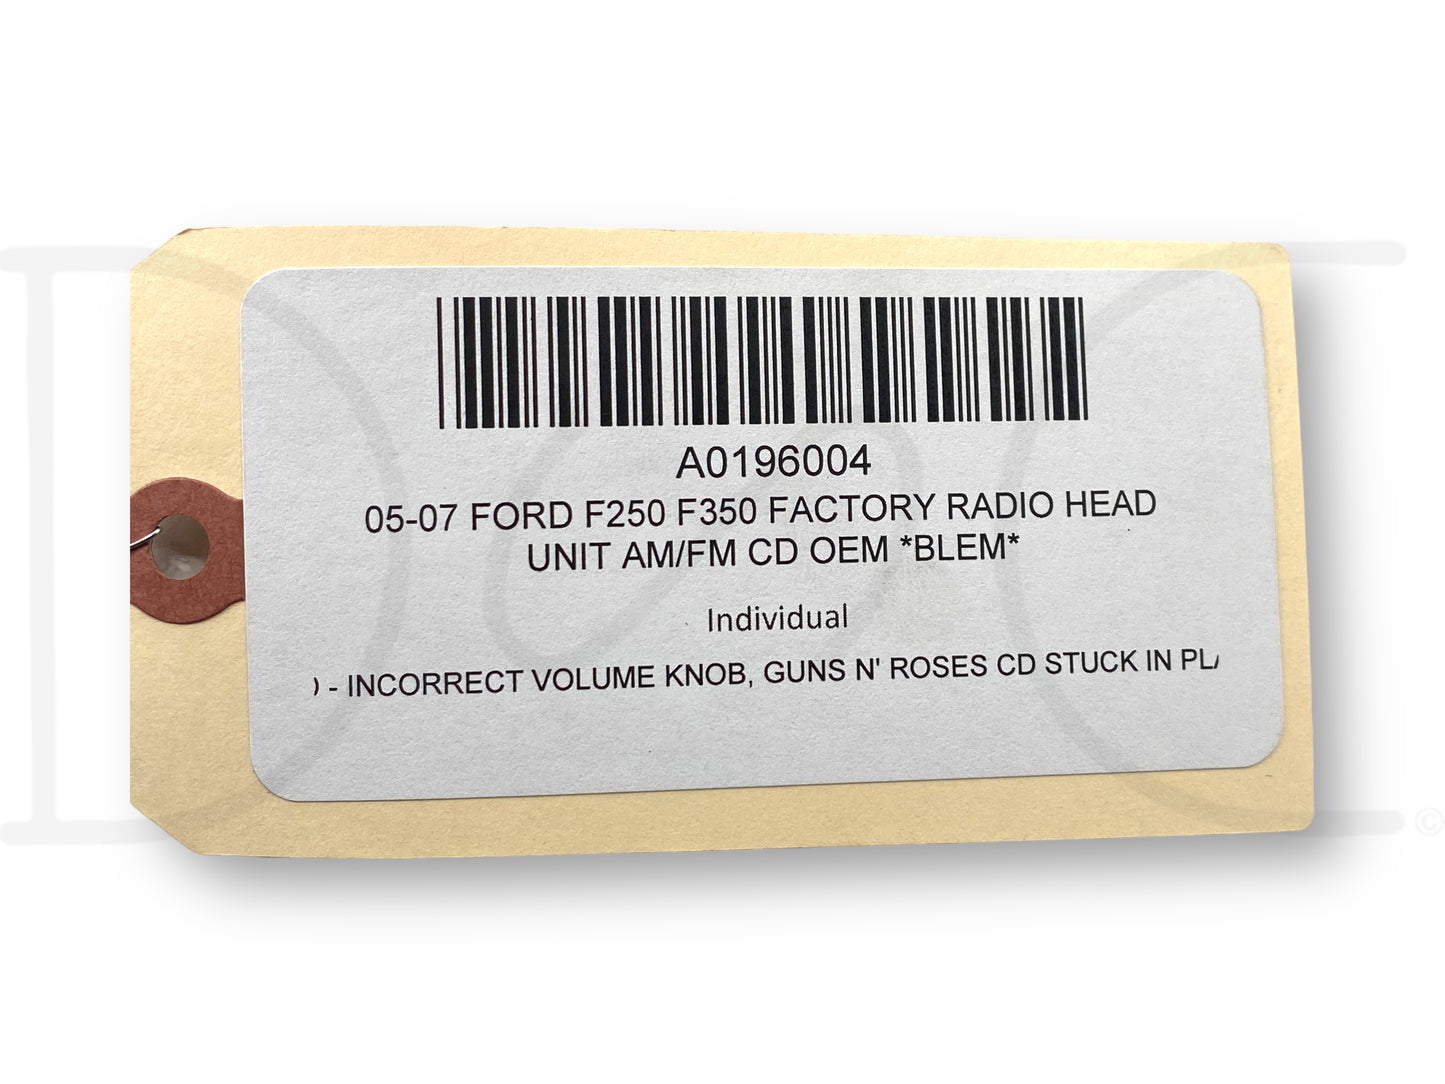 05-07 Ford F250 F350 Factory Radio Head Unit AM/FM CD OEM *Blem*